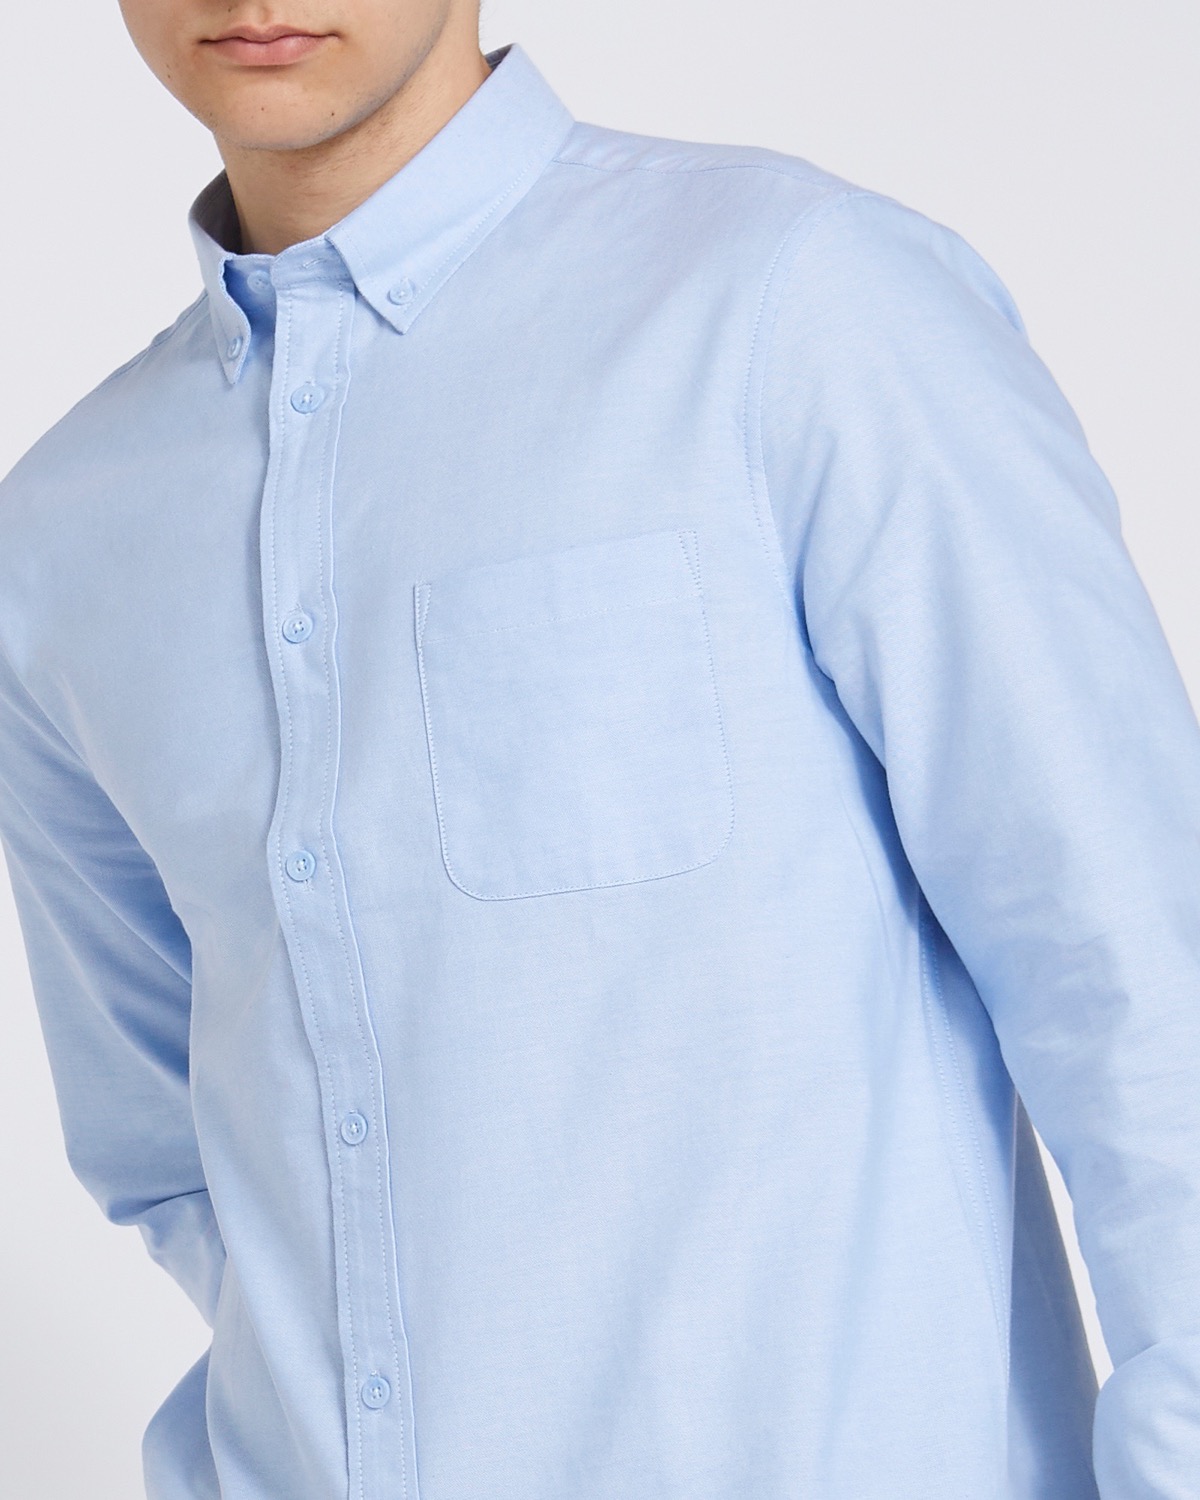 Dunnes Stores  Blue Regular Fit Long-Sleeved Oxford Shirt